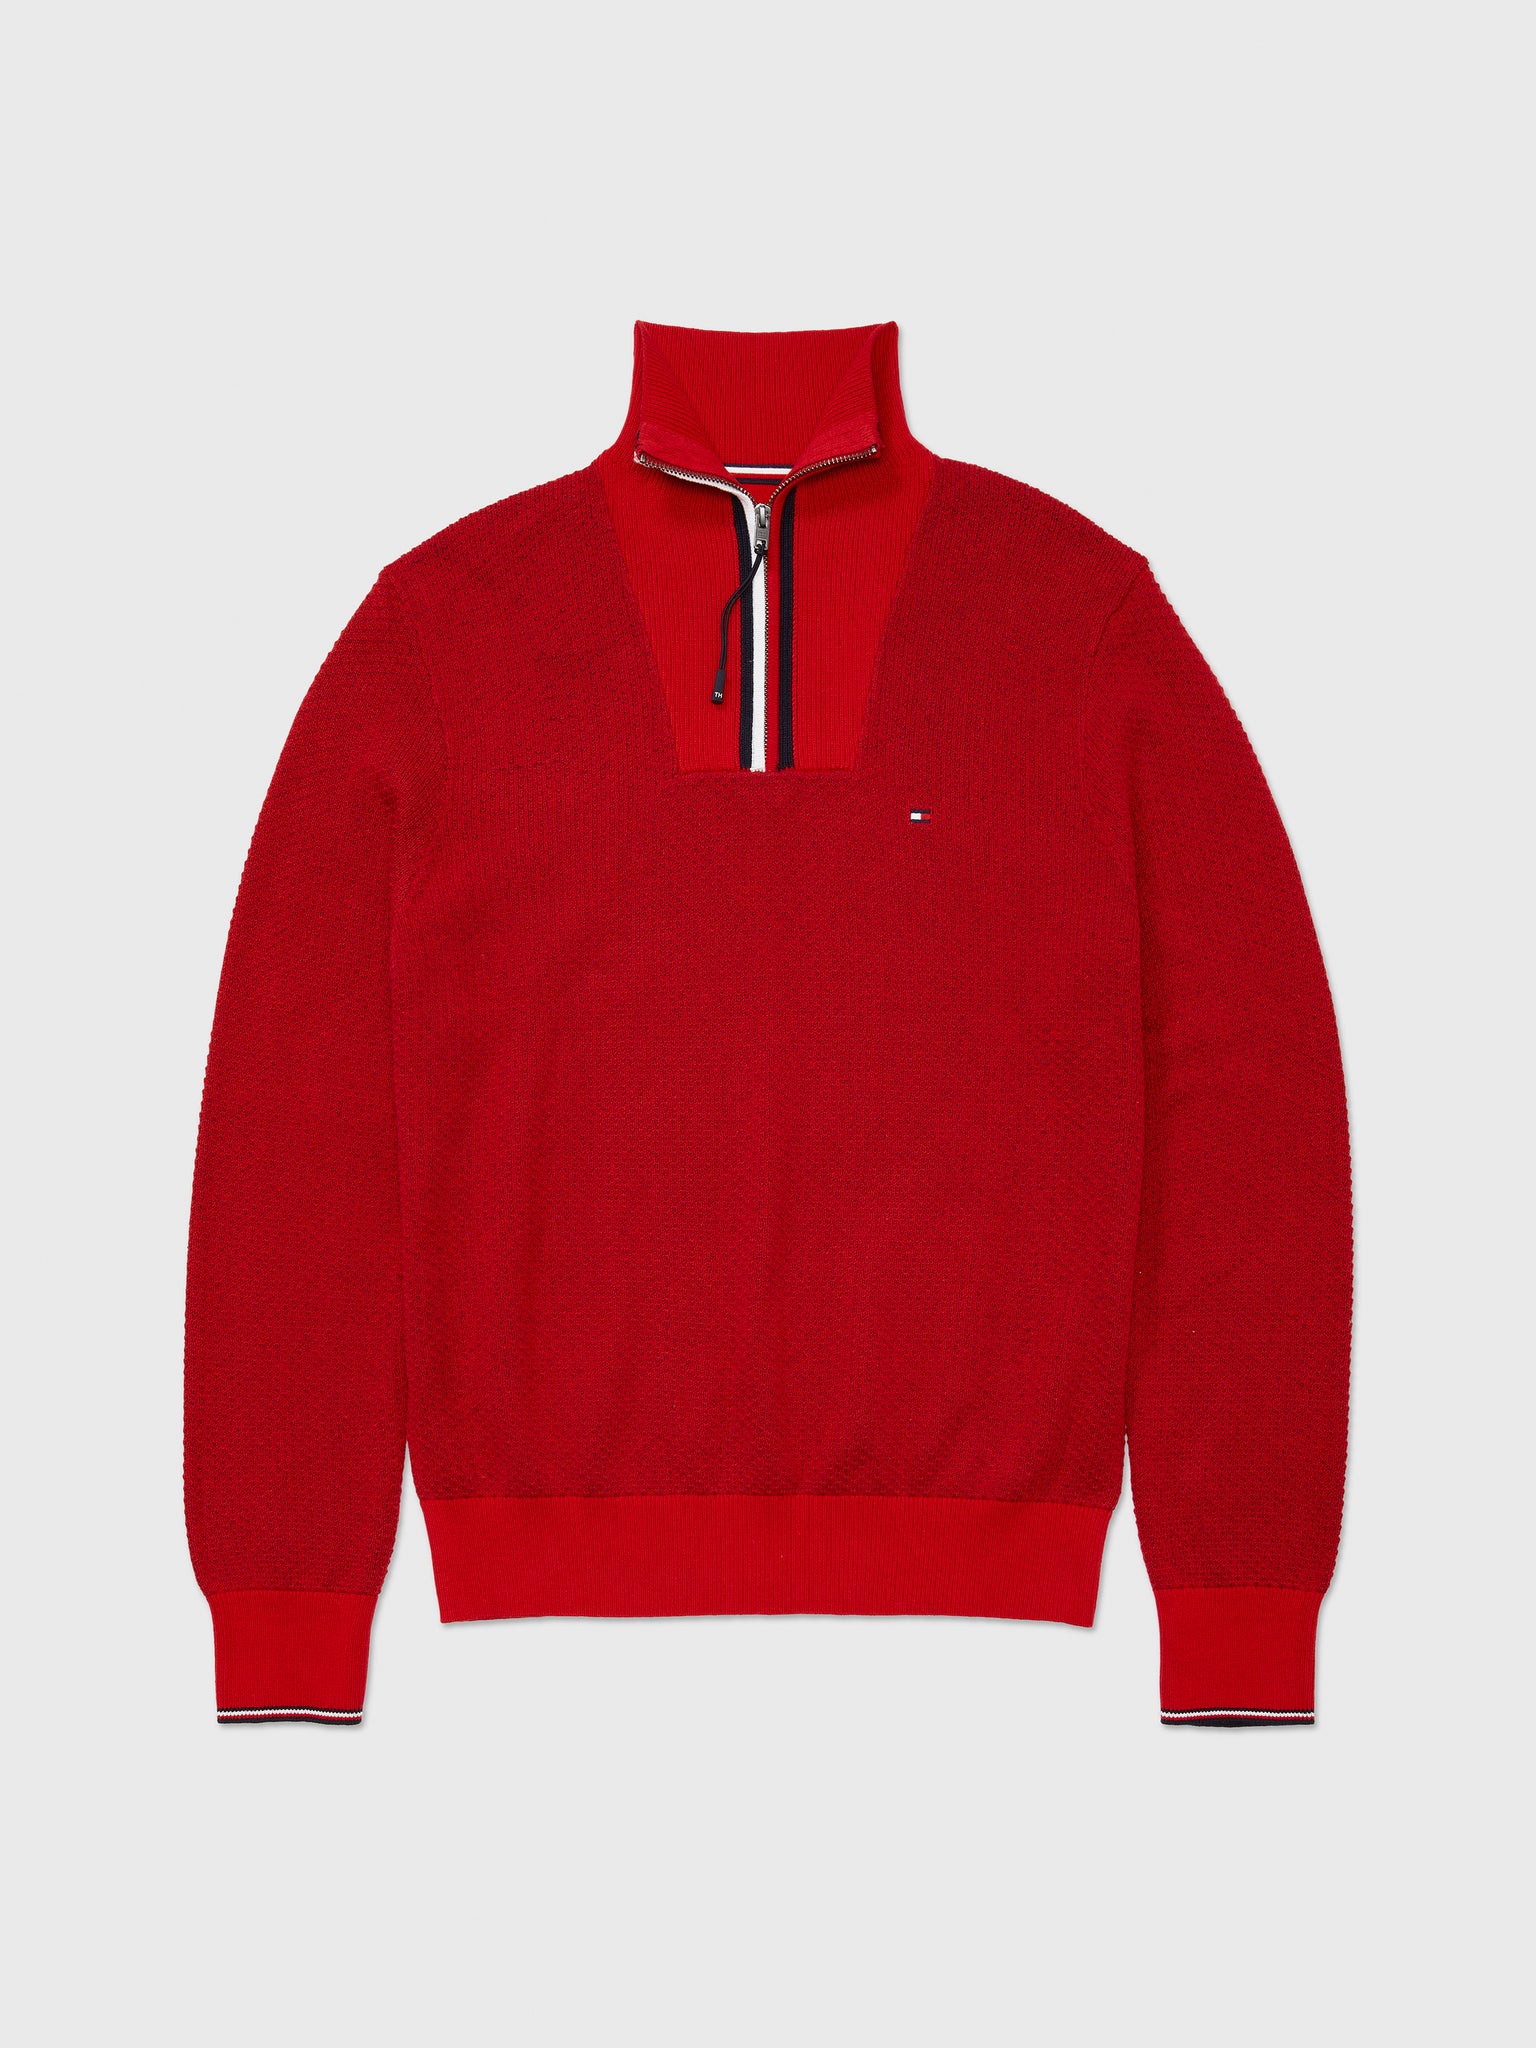 Manhanttan Quarter Zip Sweater (Mens) - Primary Red